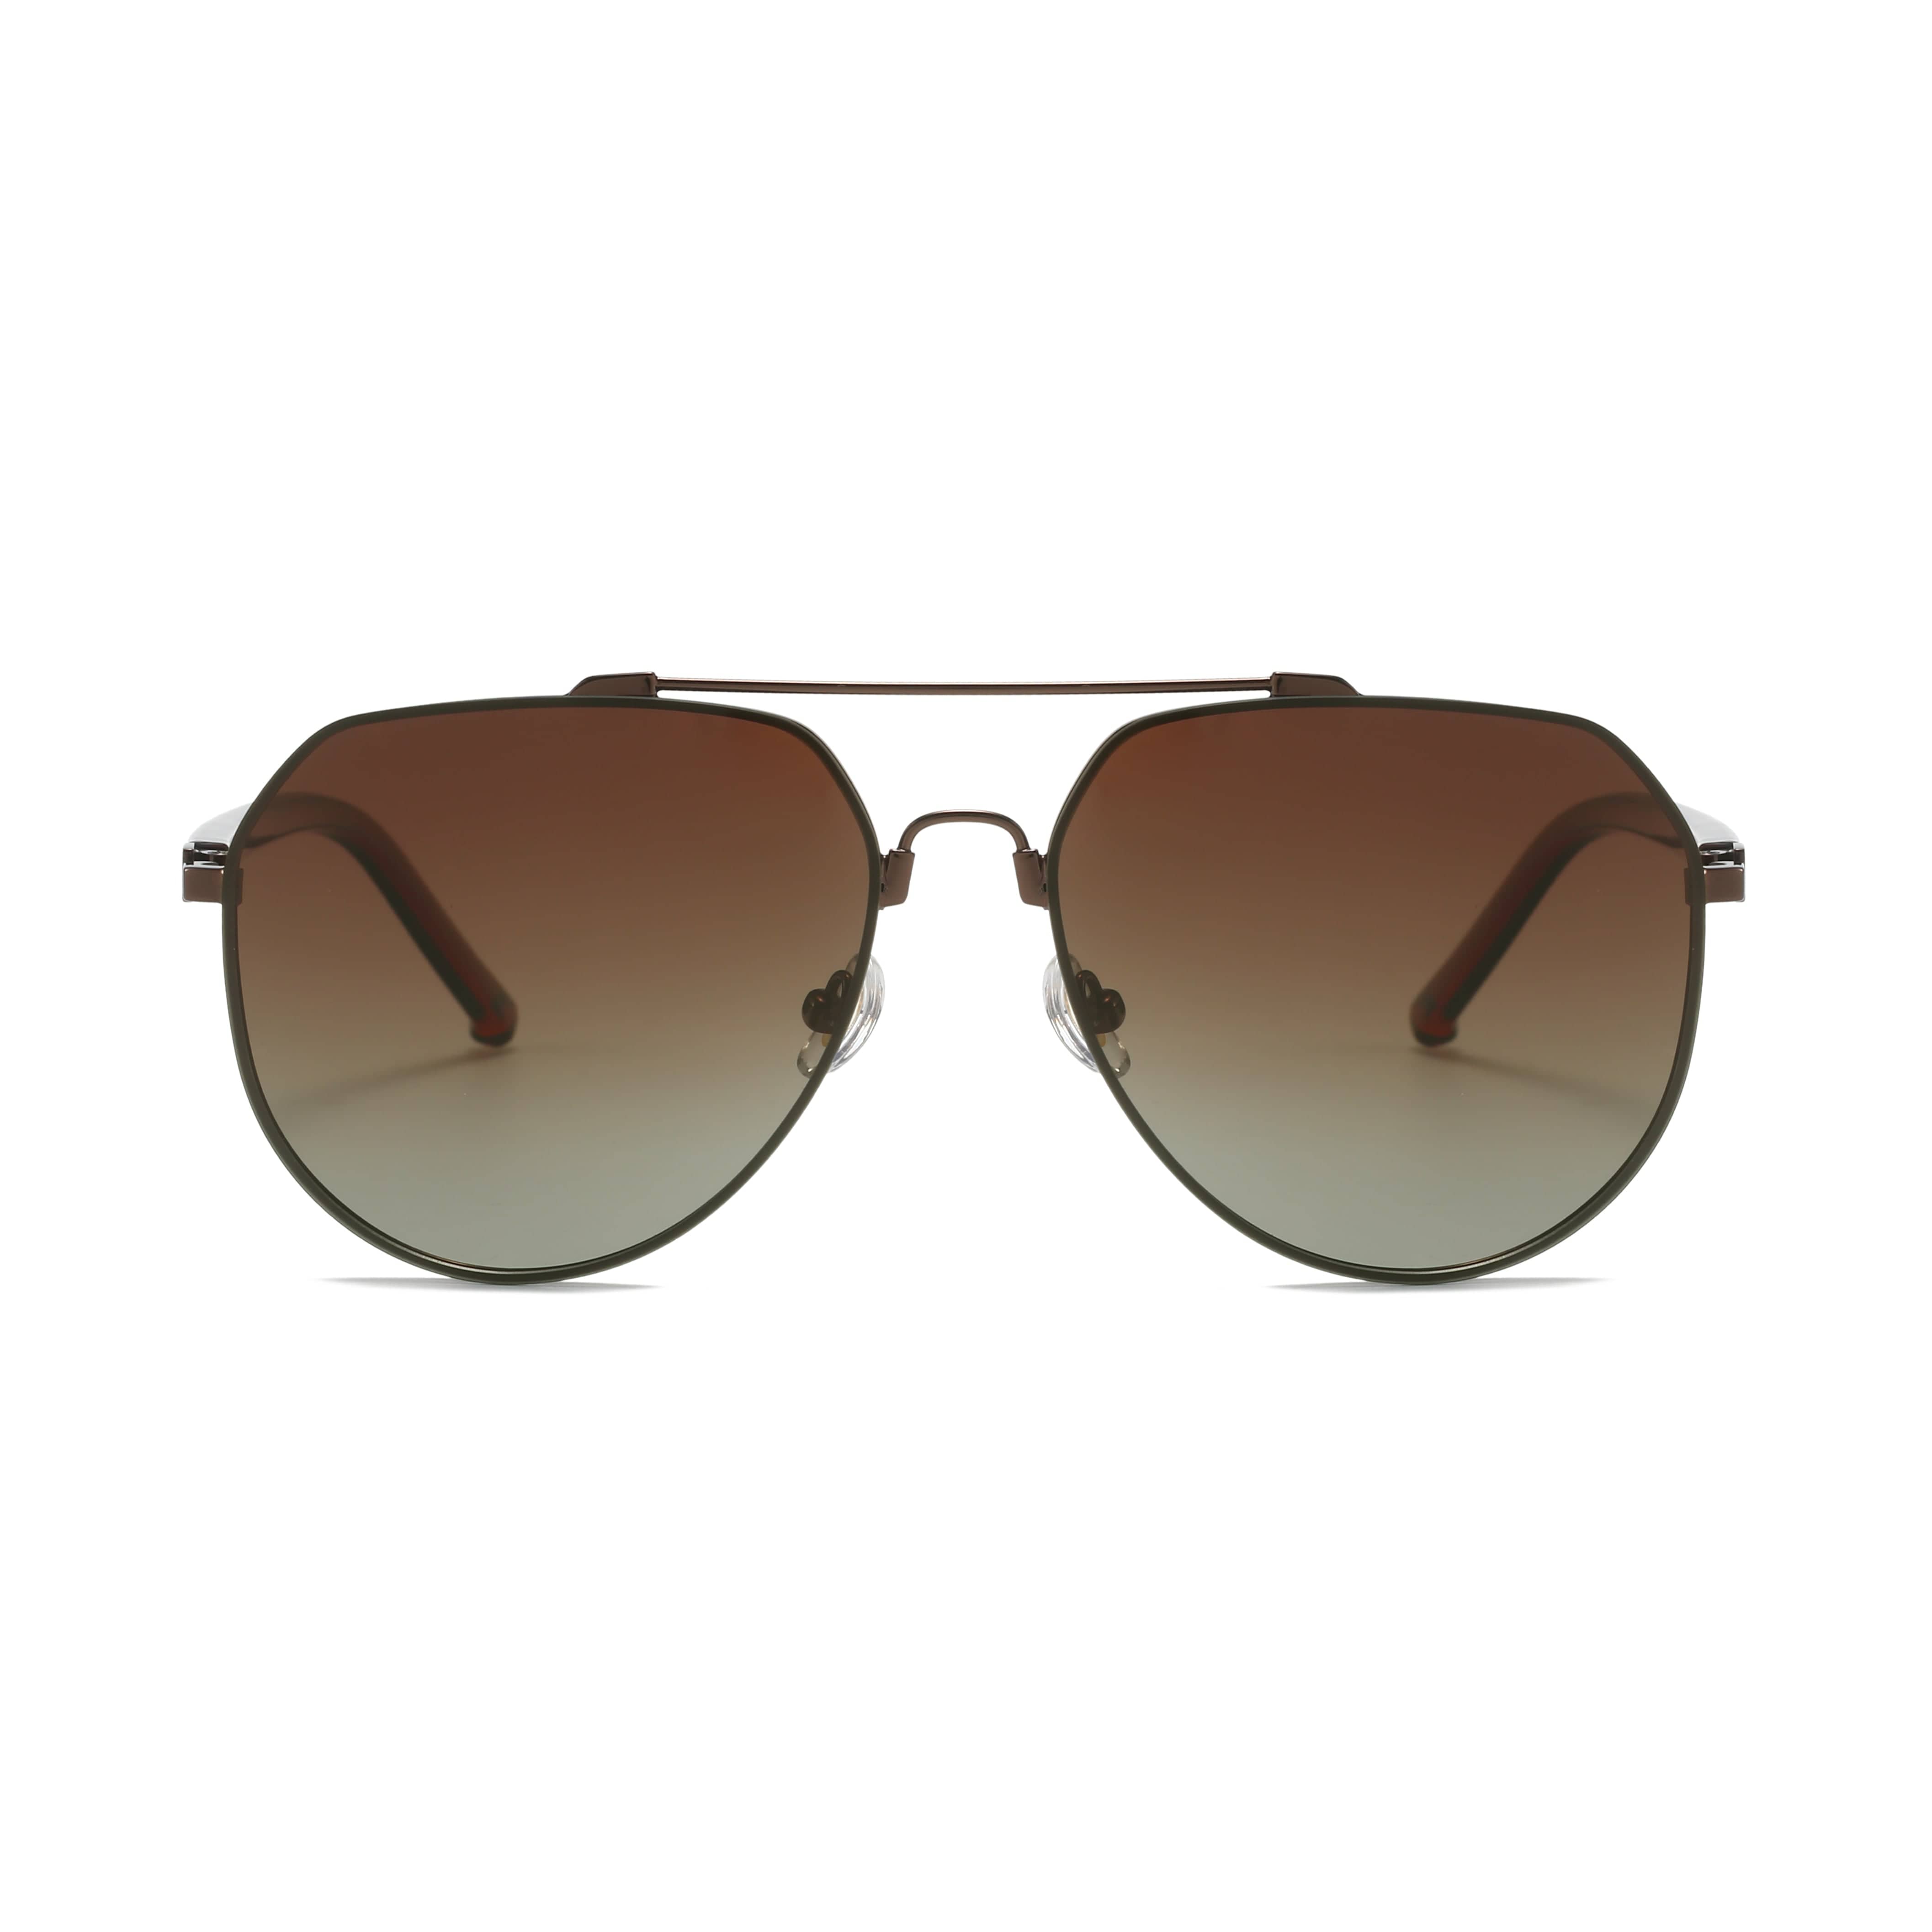 GIUSTIZIERI VECCHI Sunglasses Medium / Irish Coffee SunSpark Aviator Duo